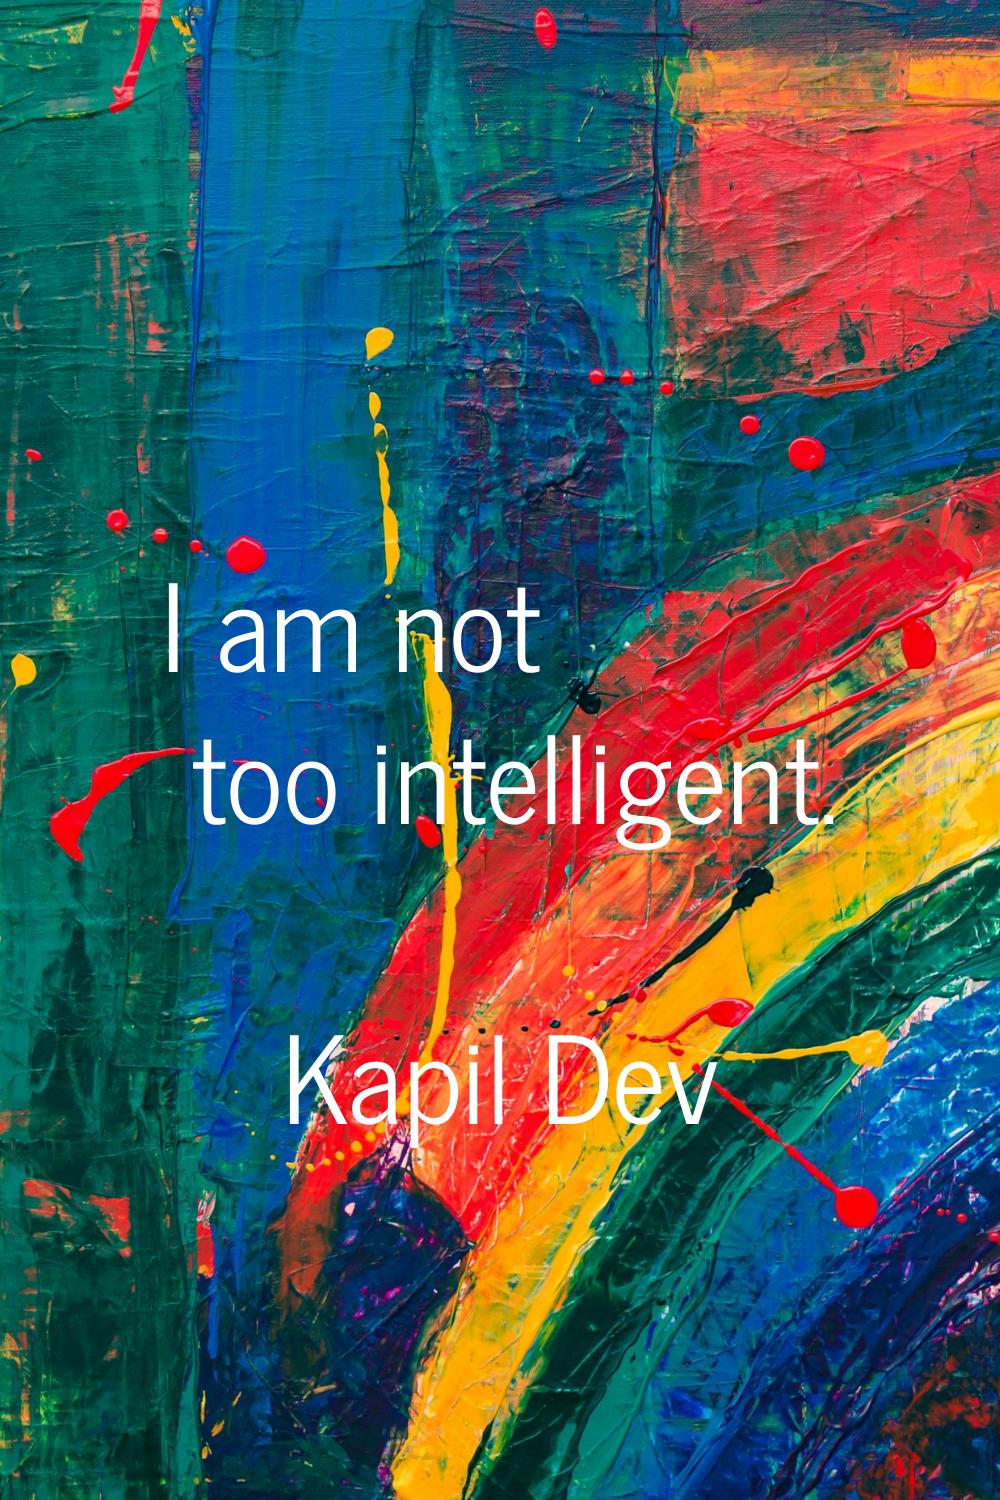 I am not too intelligent.